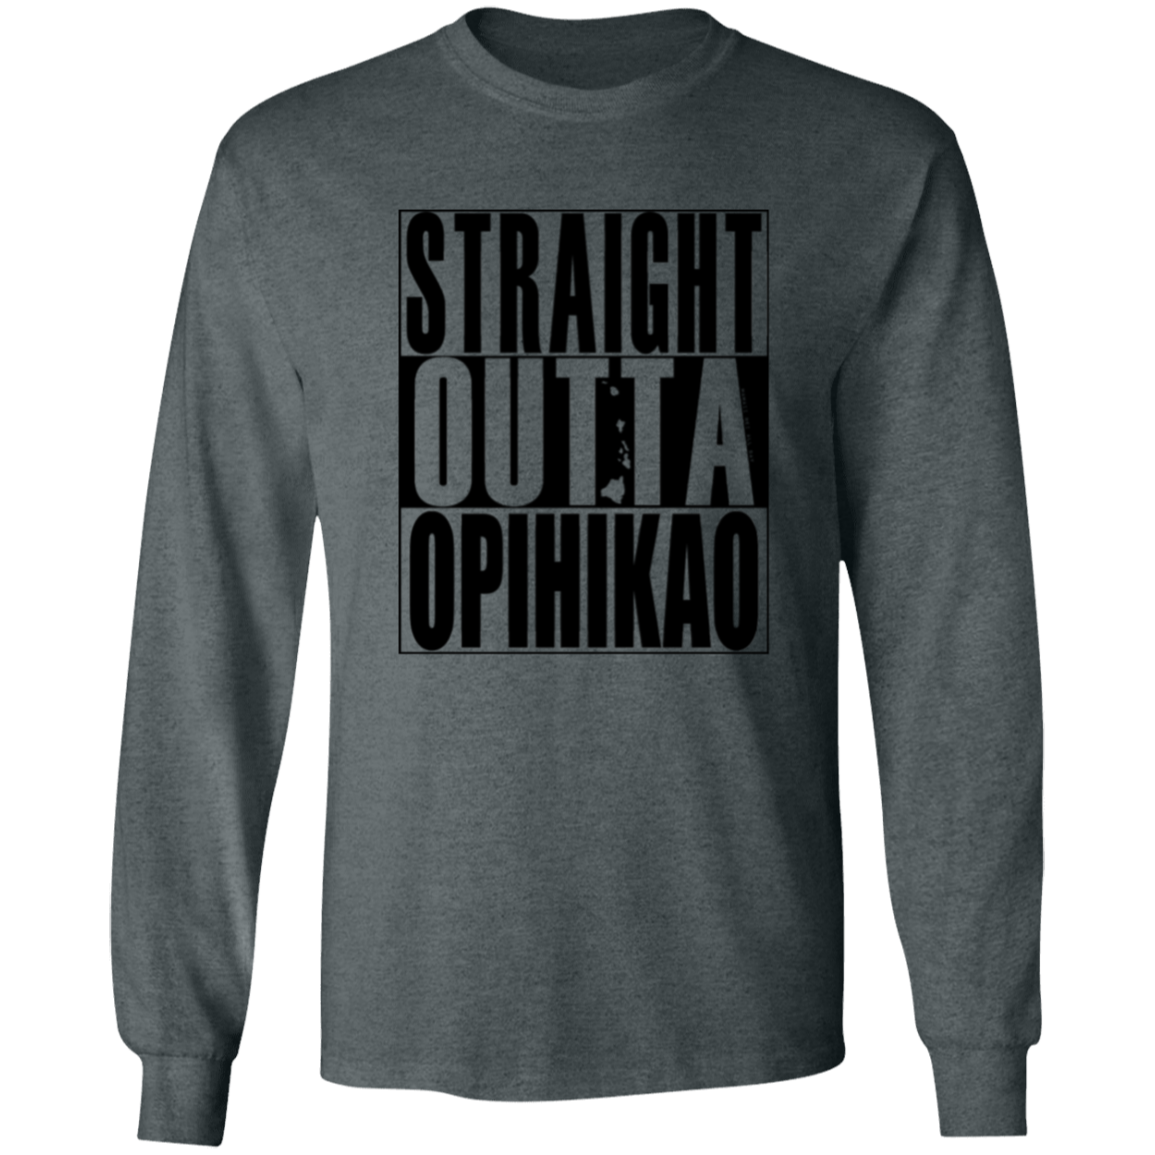 Straight Outta Opihikao (black ink) LS T-Shirt